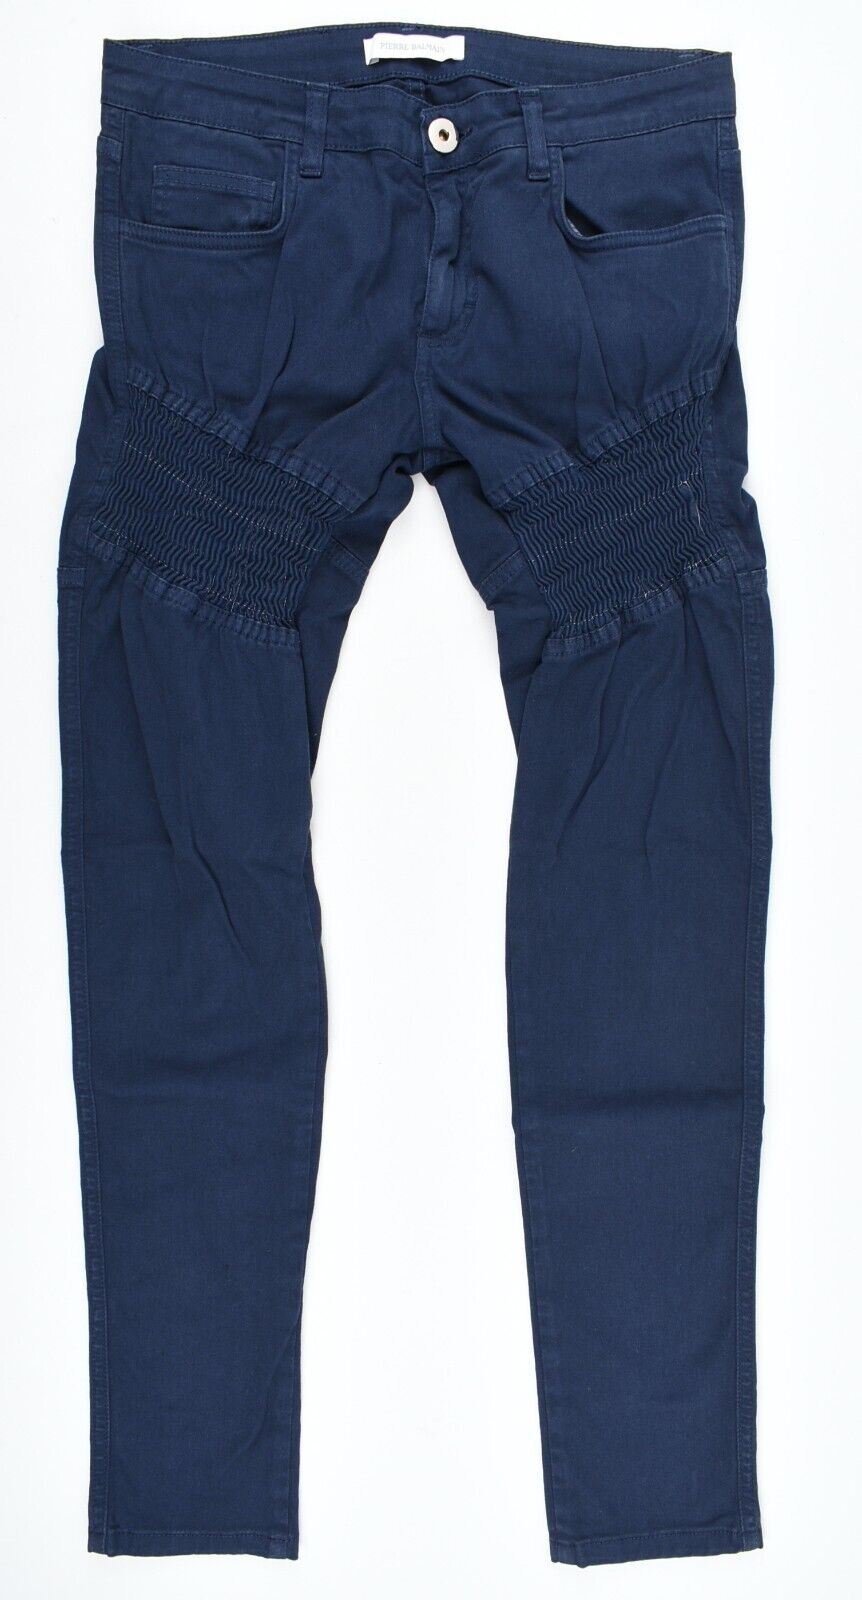 PIERRE BALMAIN Womens Low Rise Skinny Jeans, Blue, size W29-W30